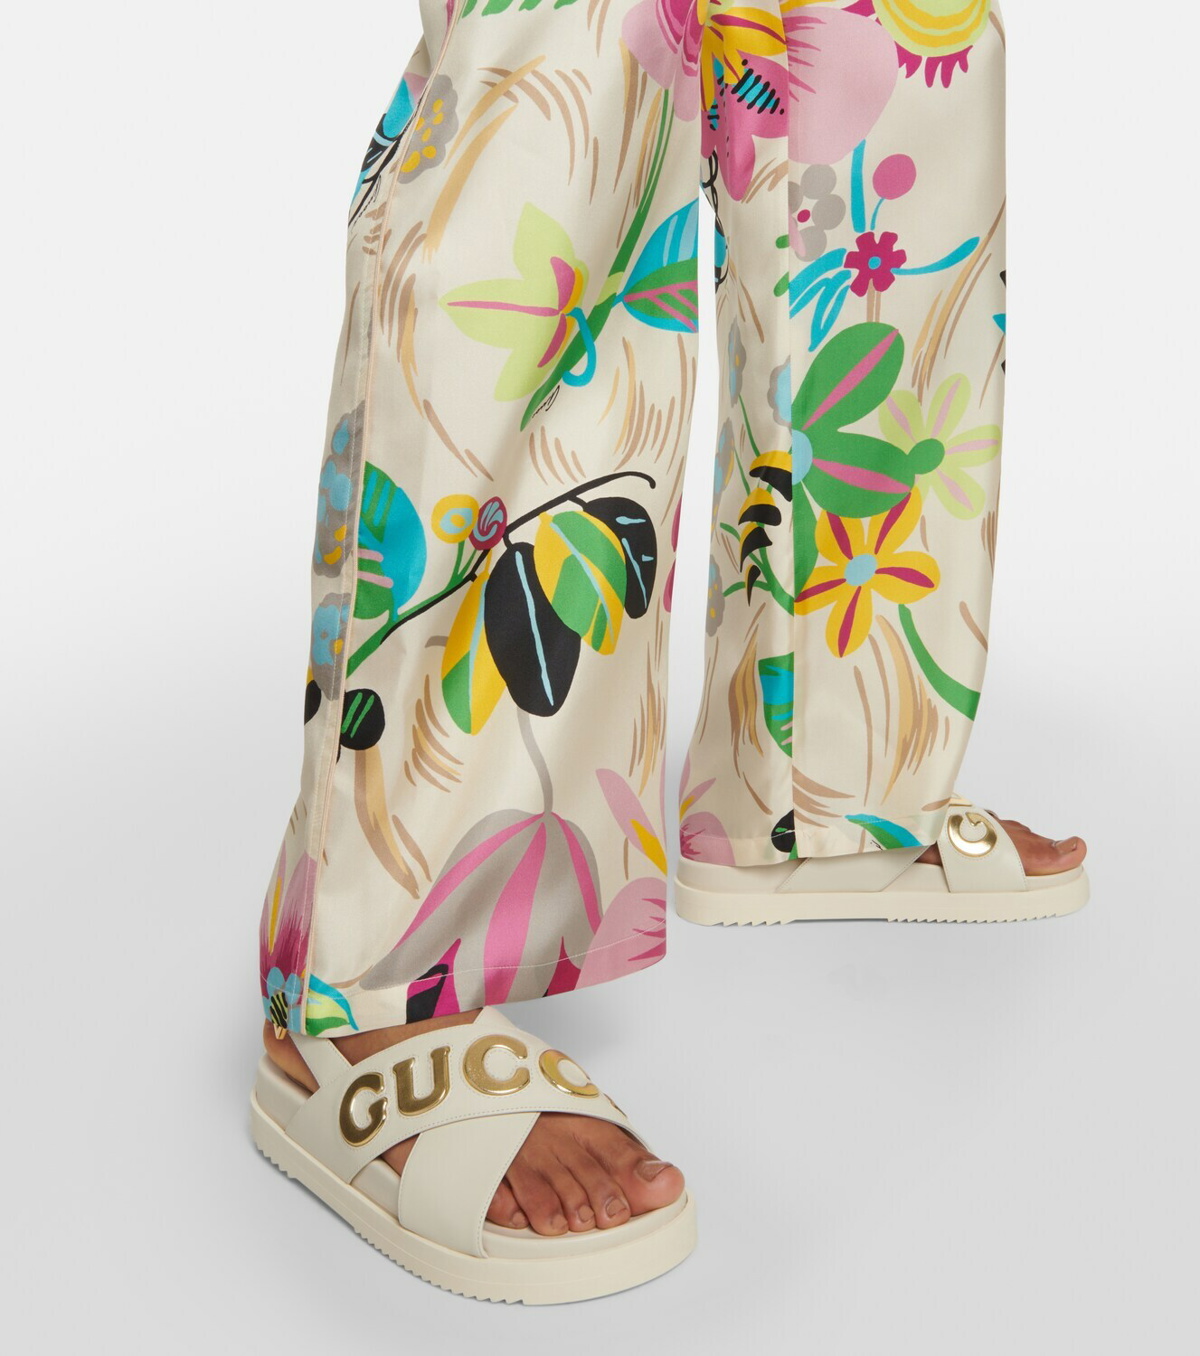 Gucci Embellished leather sandals